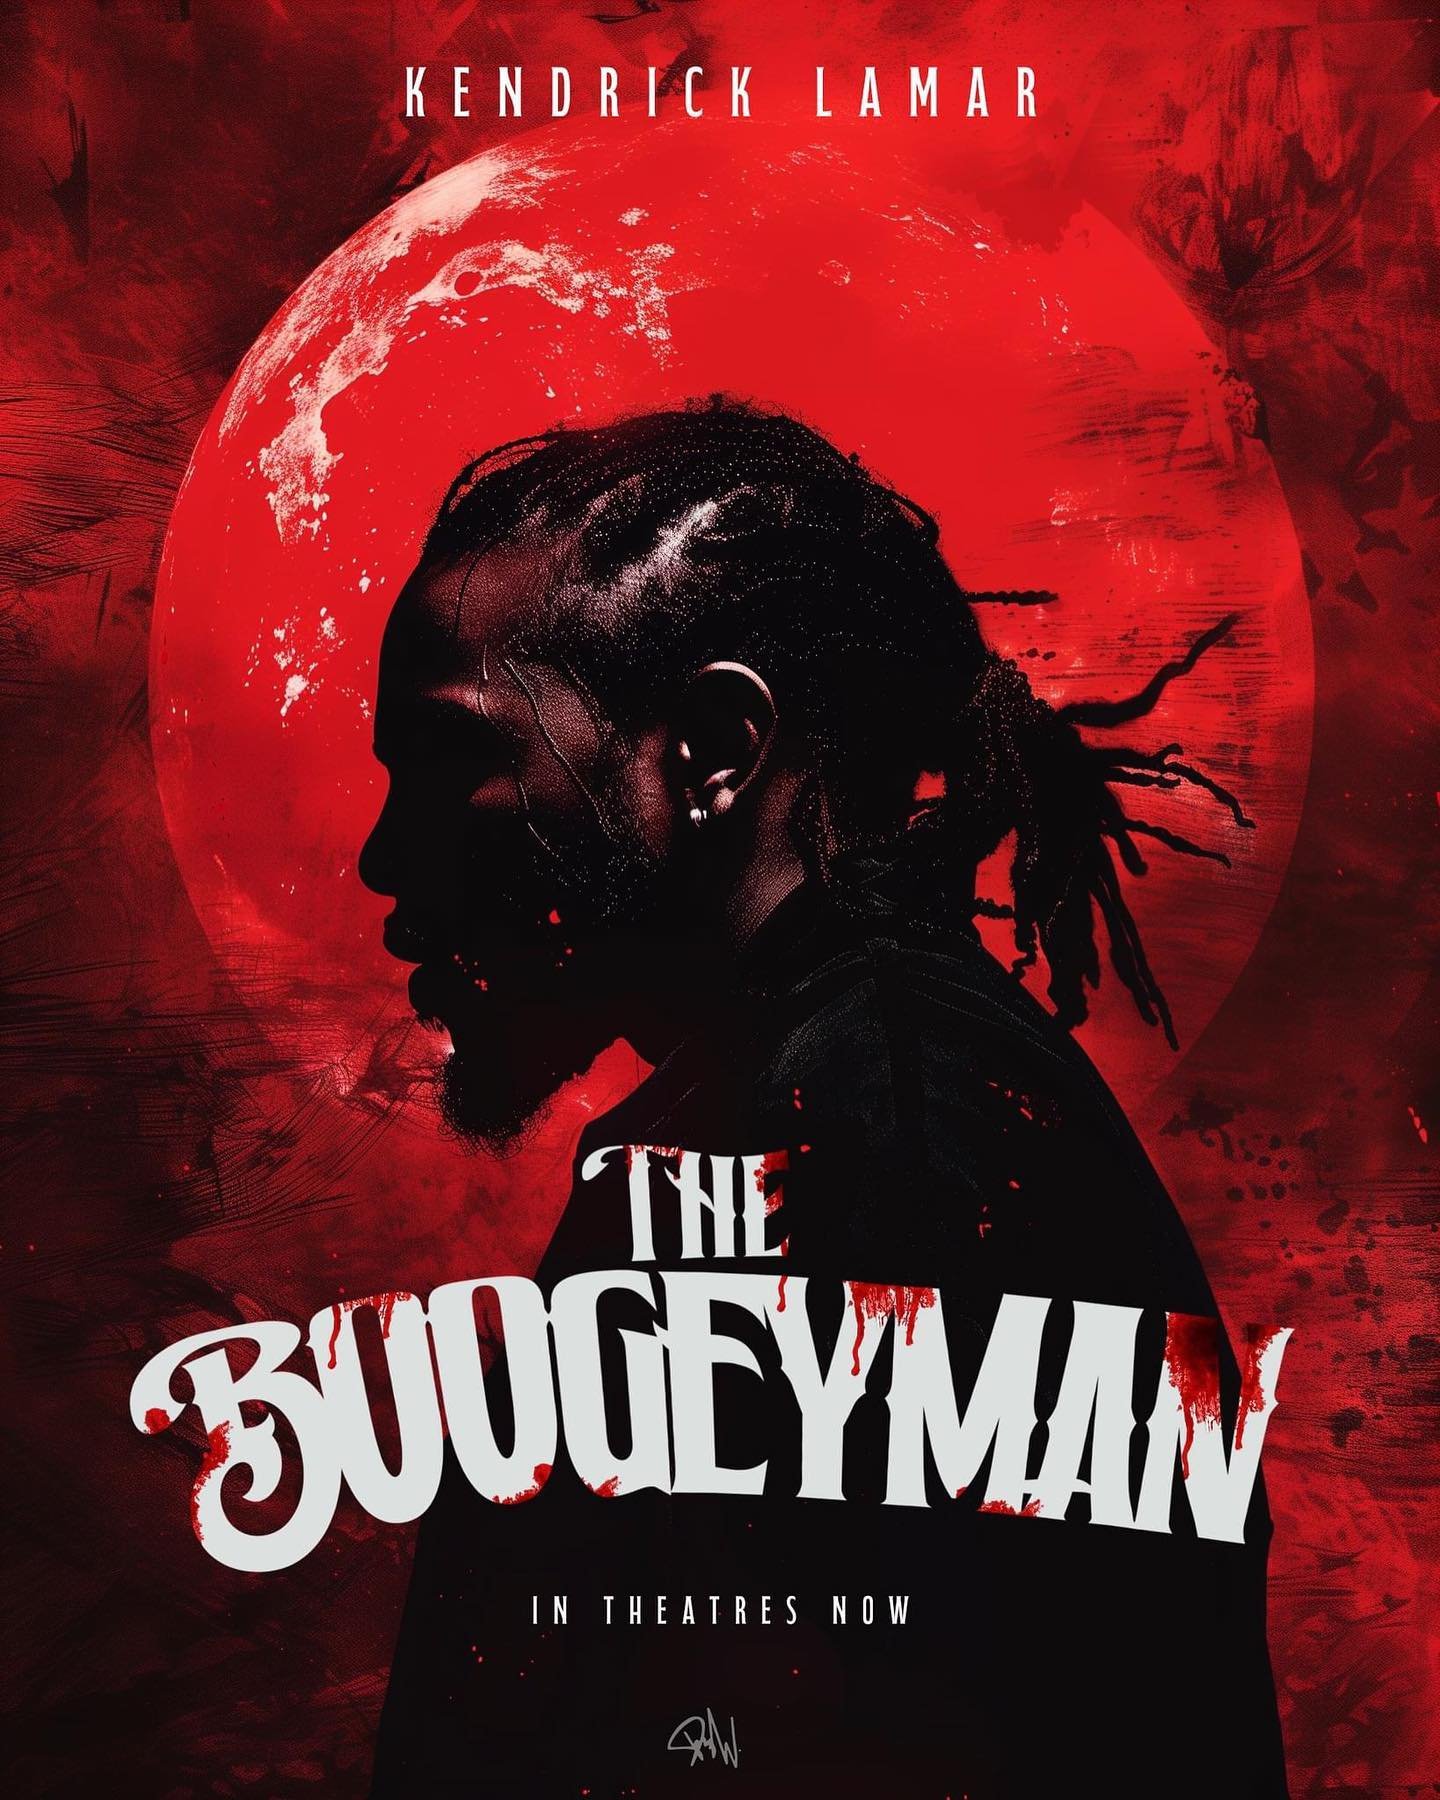 THE BOOGEYMAN | starring Kendrick Lamar

In Theatres Now 

Designed by @_thisisdez 

#drake #kendricklamar